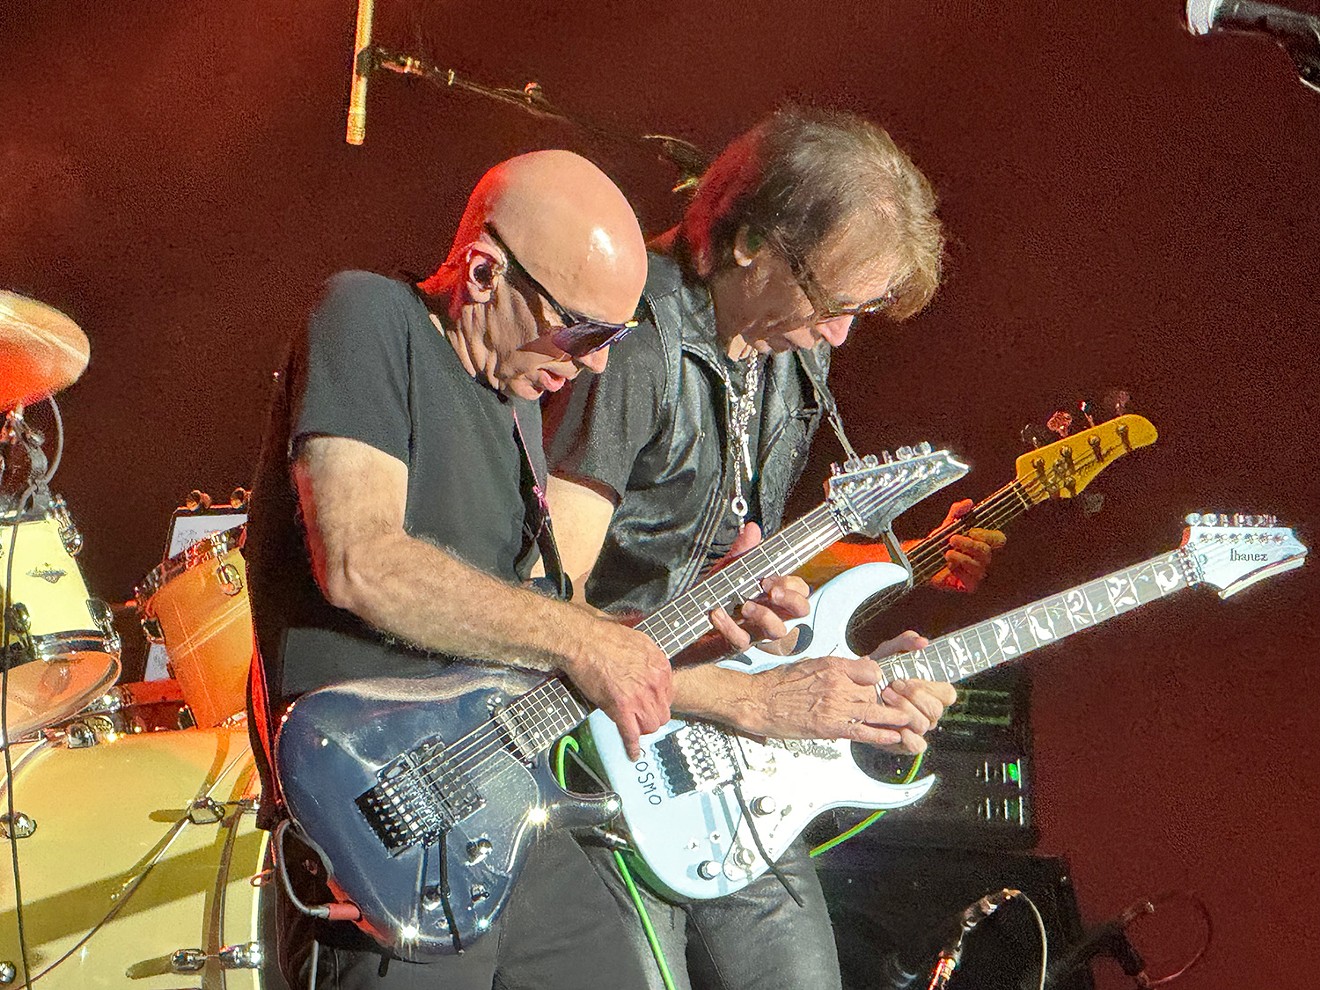 Joe Satriani (left) and Steve Vai shredding.